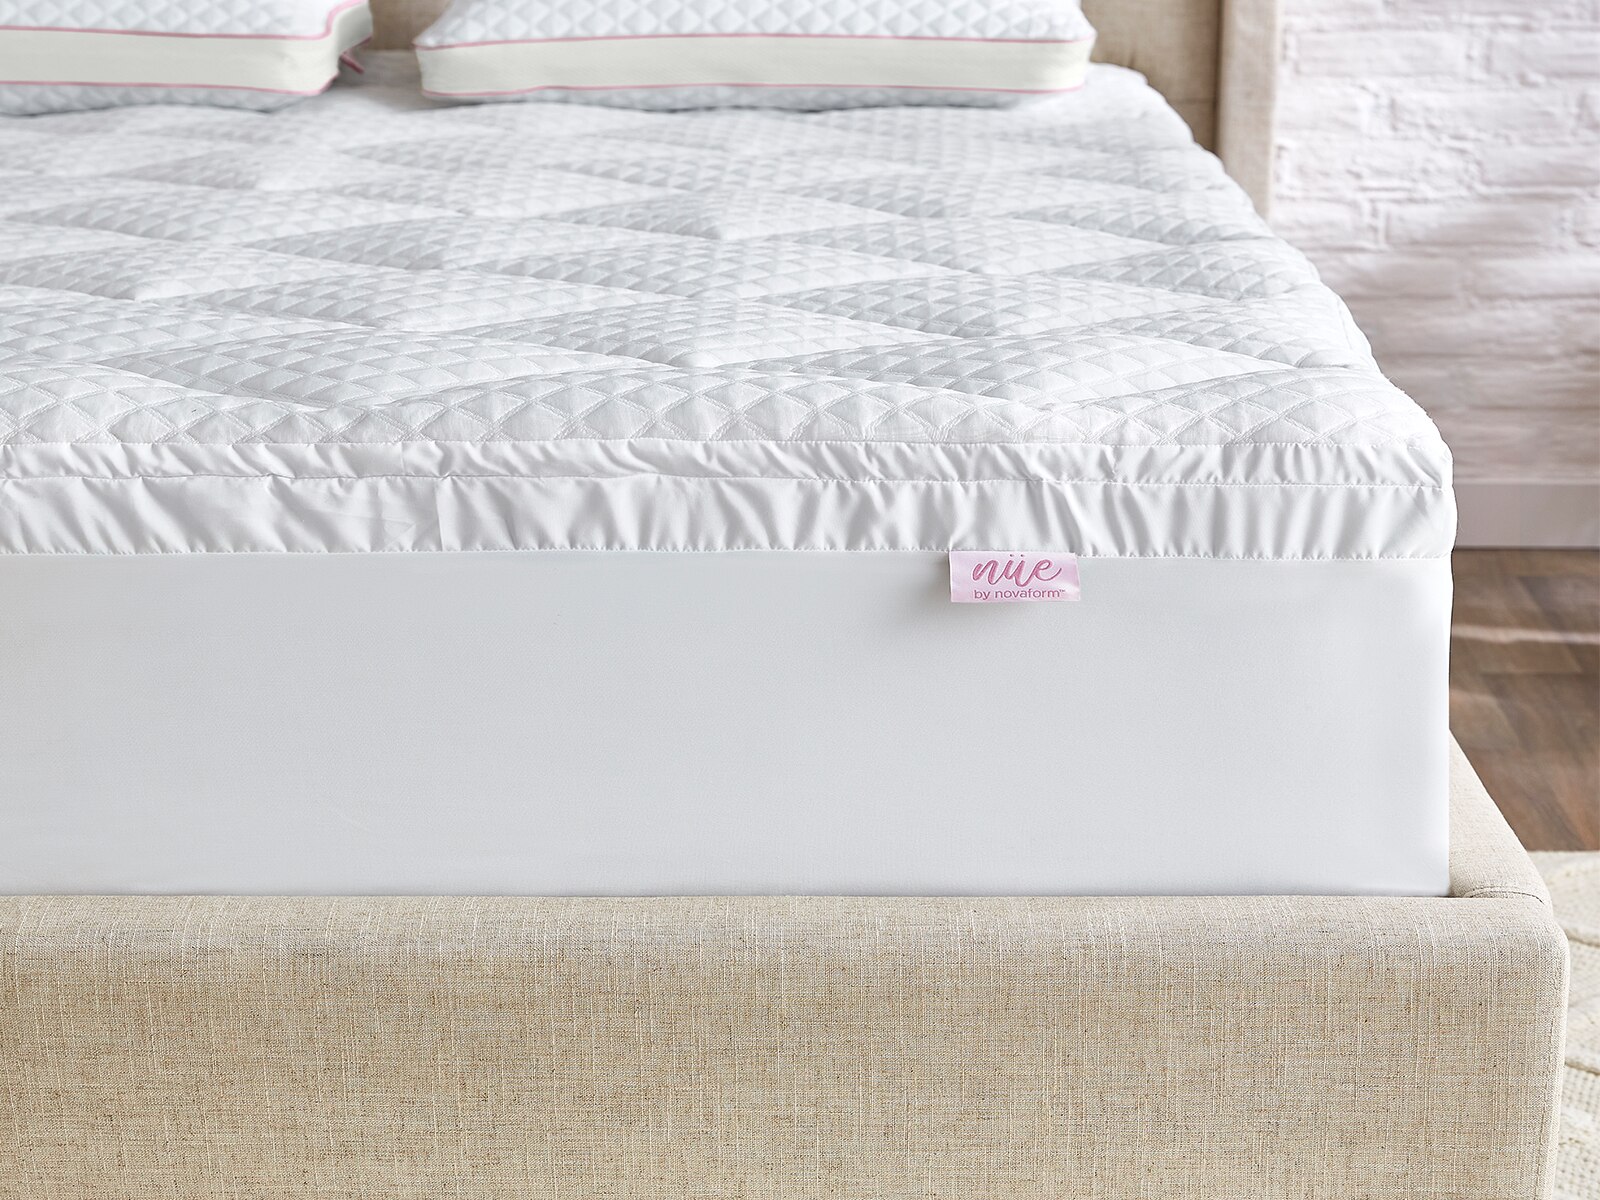 novaform 3 mattress topper luracor comfort plus foam